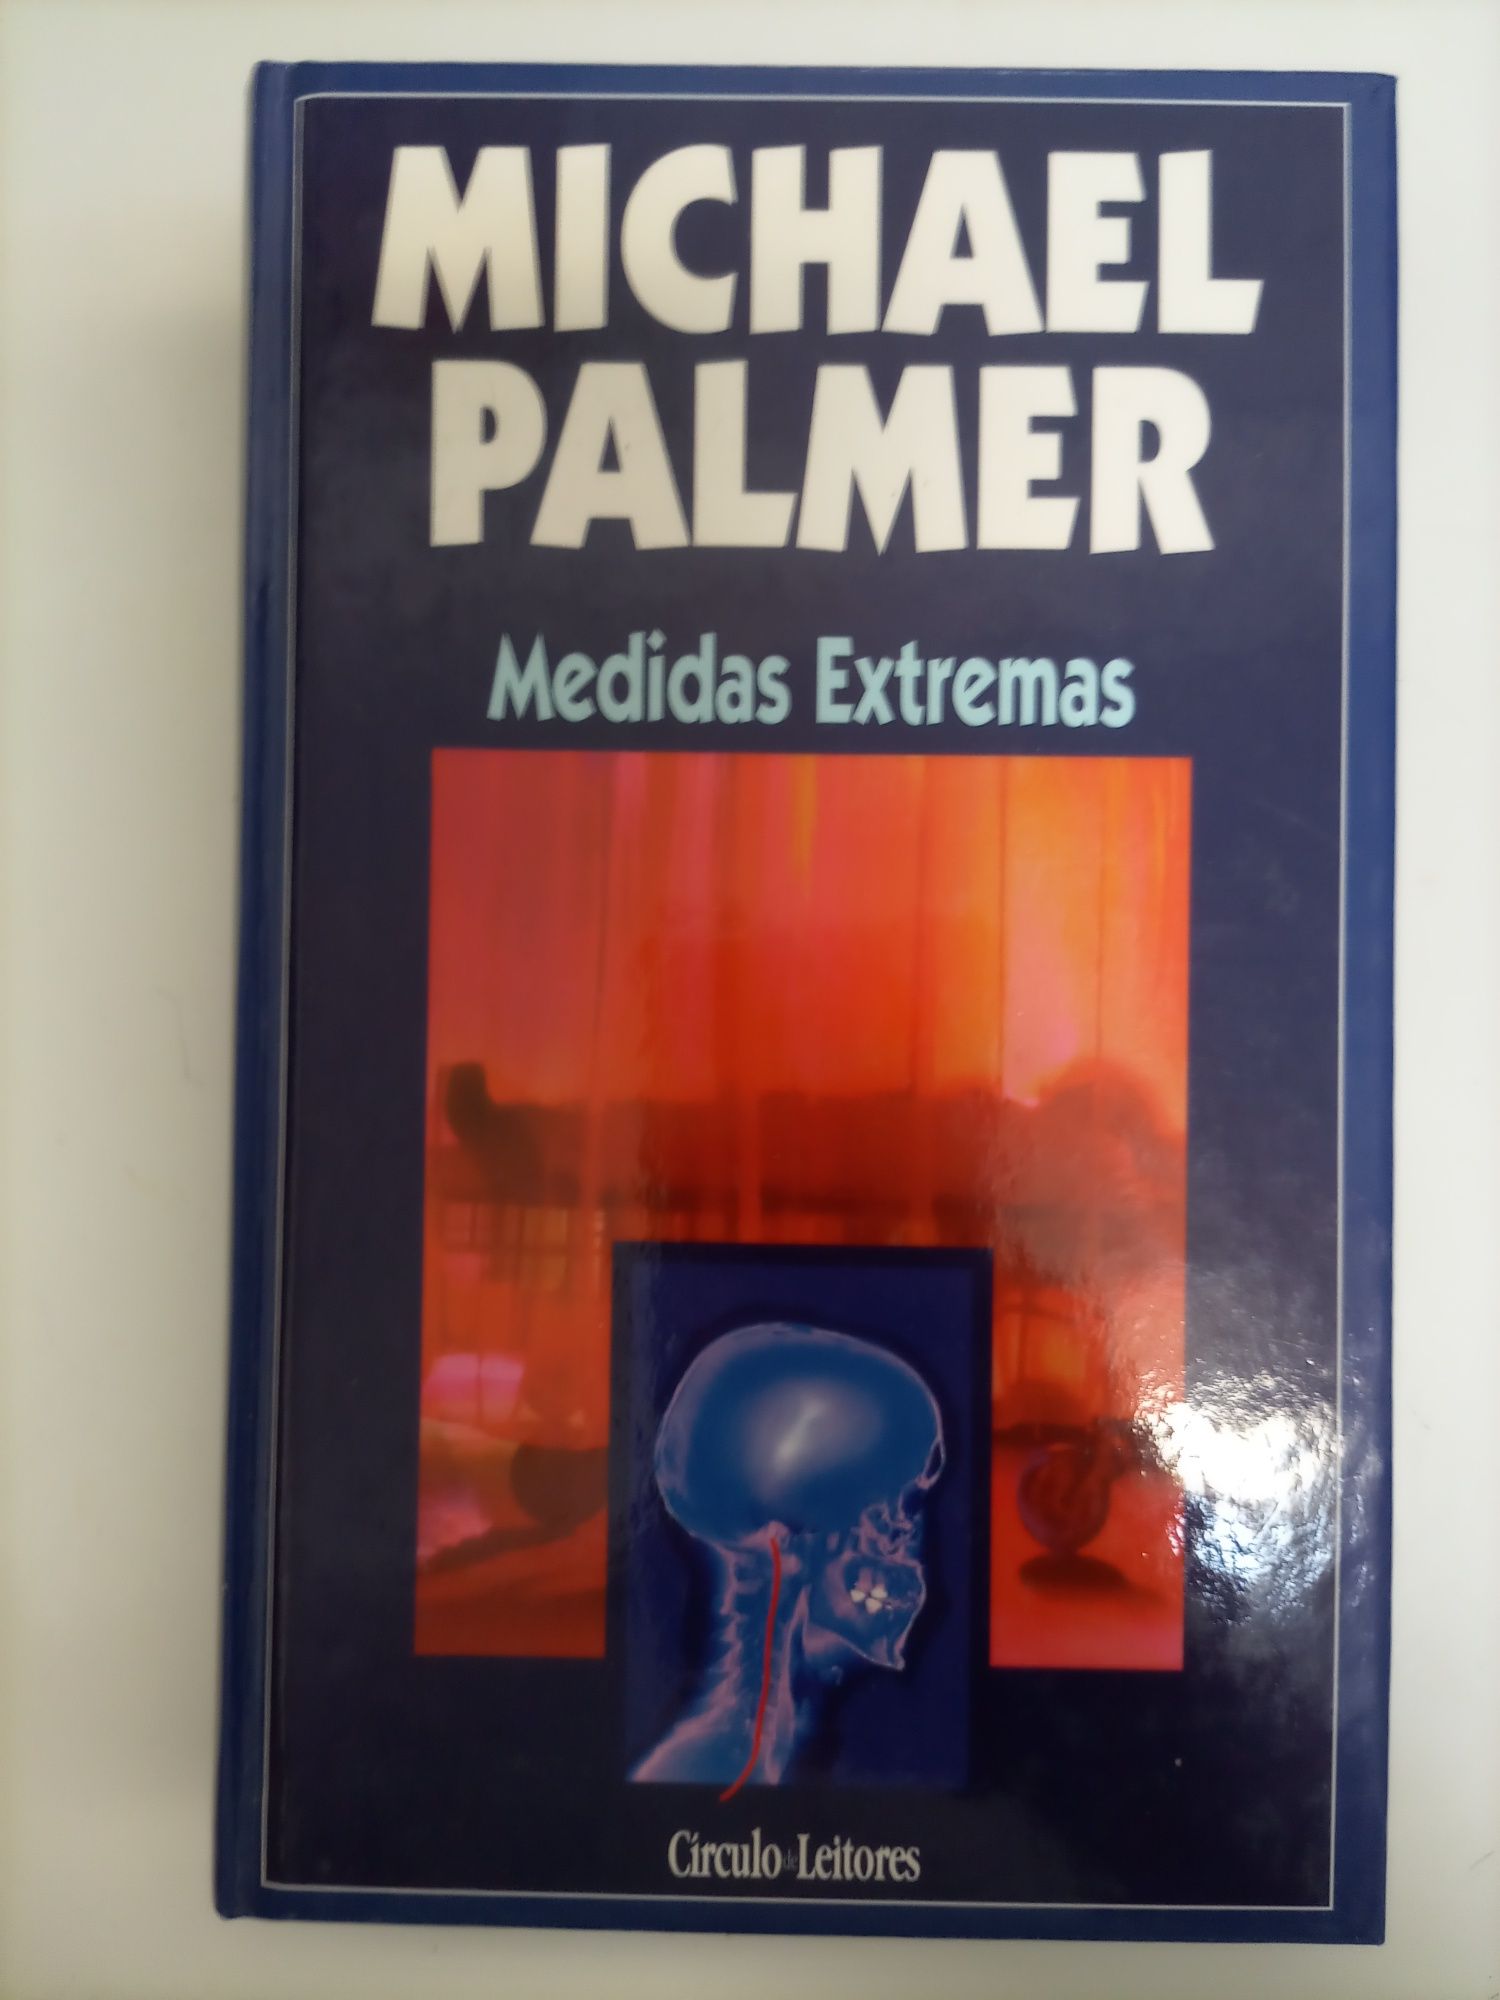 Michael palmer-medidas extremas